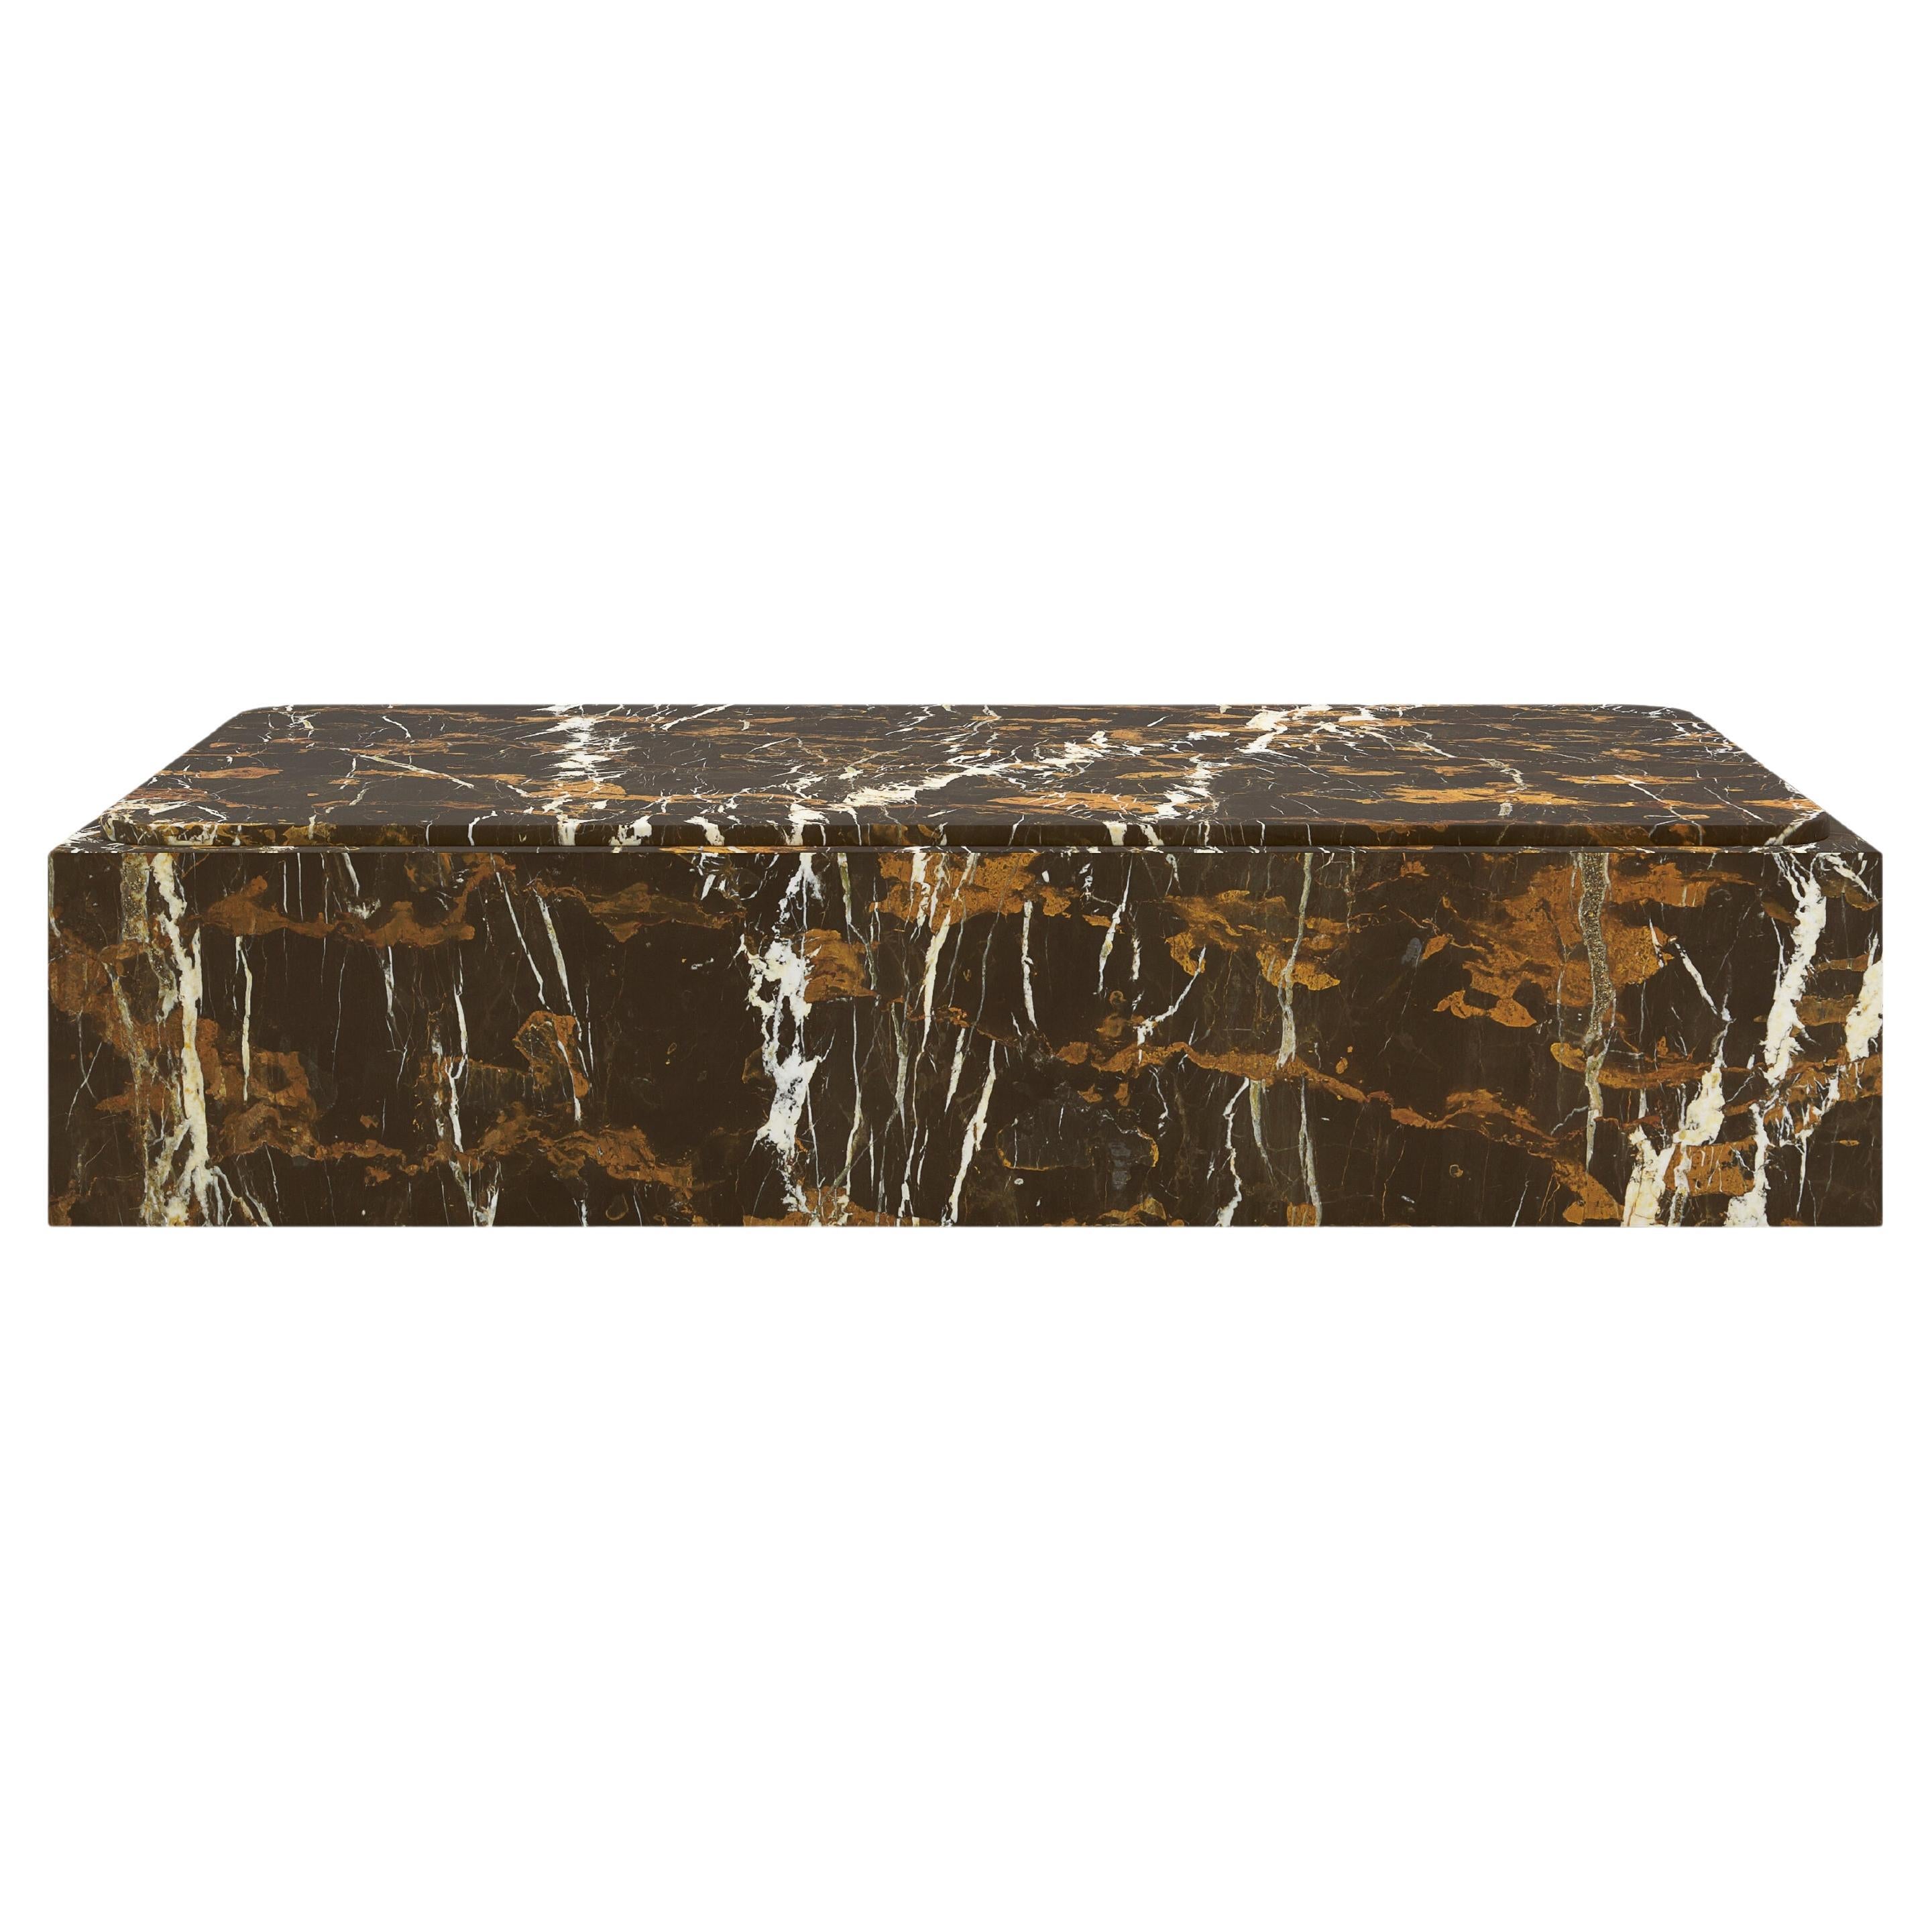 FORM(LA) Cubo Rectangle Plinth Coffee Table 48”L x 30”W x 13”H Nero Marble  For Sale